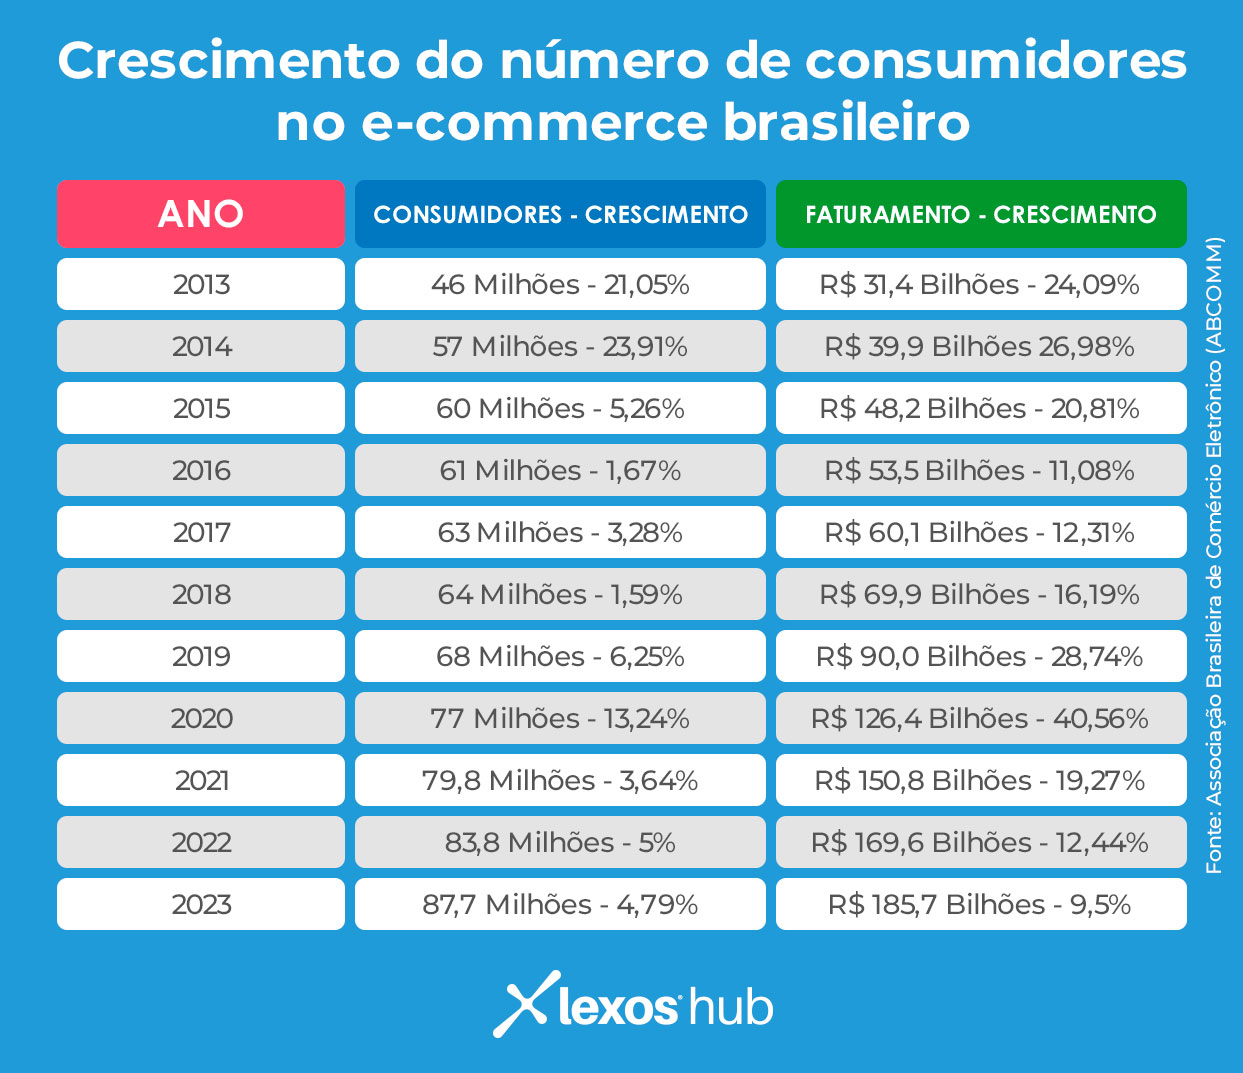 Crescimento do número de consumidores no e-commerce brasileiro Ano: Consumidores - Crescimento | Faturamento - Crescimento 2013: 46 Milhões - 21,05% | R$ 31,4 Bilhões - 24,09% 2014: 57 Milhões - 23,91% - | R$ 39,9 Bilhões 26,98% 2015: 60 Milhões - 5,26% | R$ 48,2 Bilhões - 20,81% 2016: 61 Milhões - 1,67% | R$ 53,5 Bilhões - 11,08% 2017: 63 Milhões - 3,28% | R$ 60,1 Bilhões - 12,31% 2018: 64 Milhões - 1,59% | R$ 69,9 Bilhões - 16,19% 2019: 68 Milhões - 6,25% | R$ 90,0 Bilhões - 28,74% 2020: 77 Milhões - 13,24% | R$ 126,4 Bilhões - 40,56% 2021: 79,8 Milhões - 3,64% | R$ 150,8 Bilhões - 19,27% 2022: 83,8 Milhões - 5% | R$ 169,6 Bilhões - 12,44% 2023: 87,7 Milhões - 4,79% | R$ 185,7 Bilhões - 9,5%